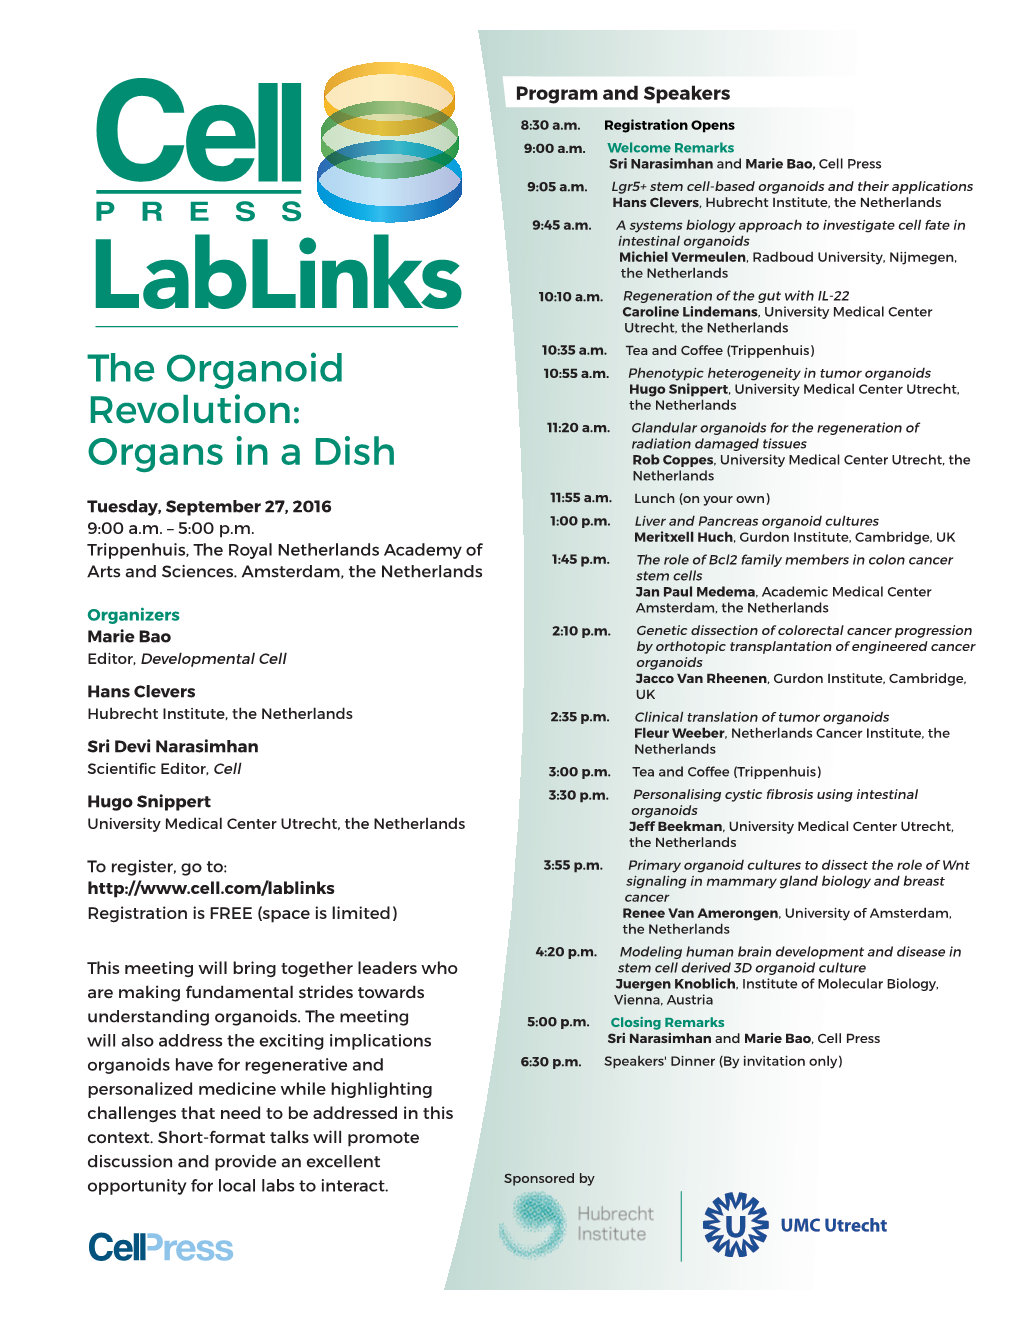 The Organoid Revolution: Organs in a Dish